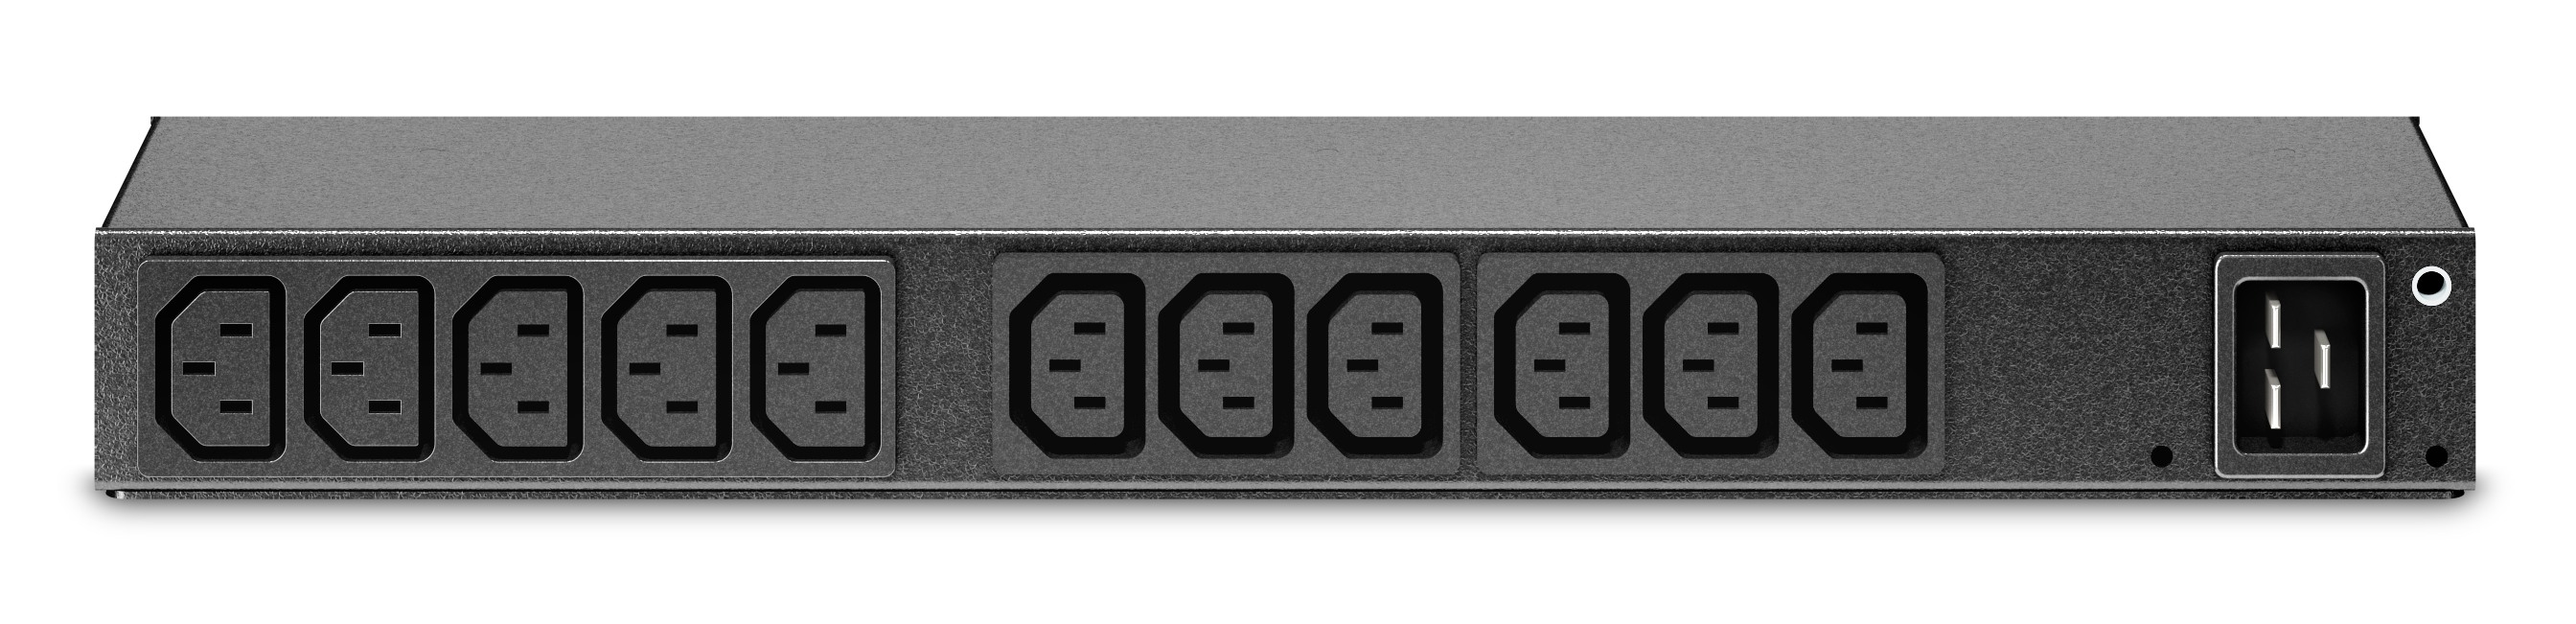 APC AP6020A - Rack PDU, Basic, 0U/1U, 100-240V/20A, 220-240V/16A, (13) C13